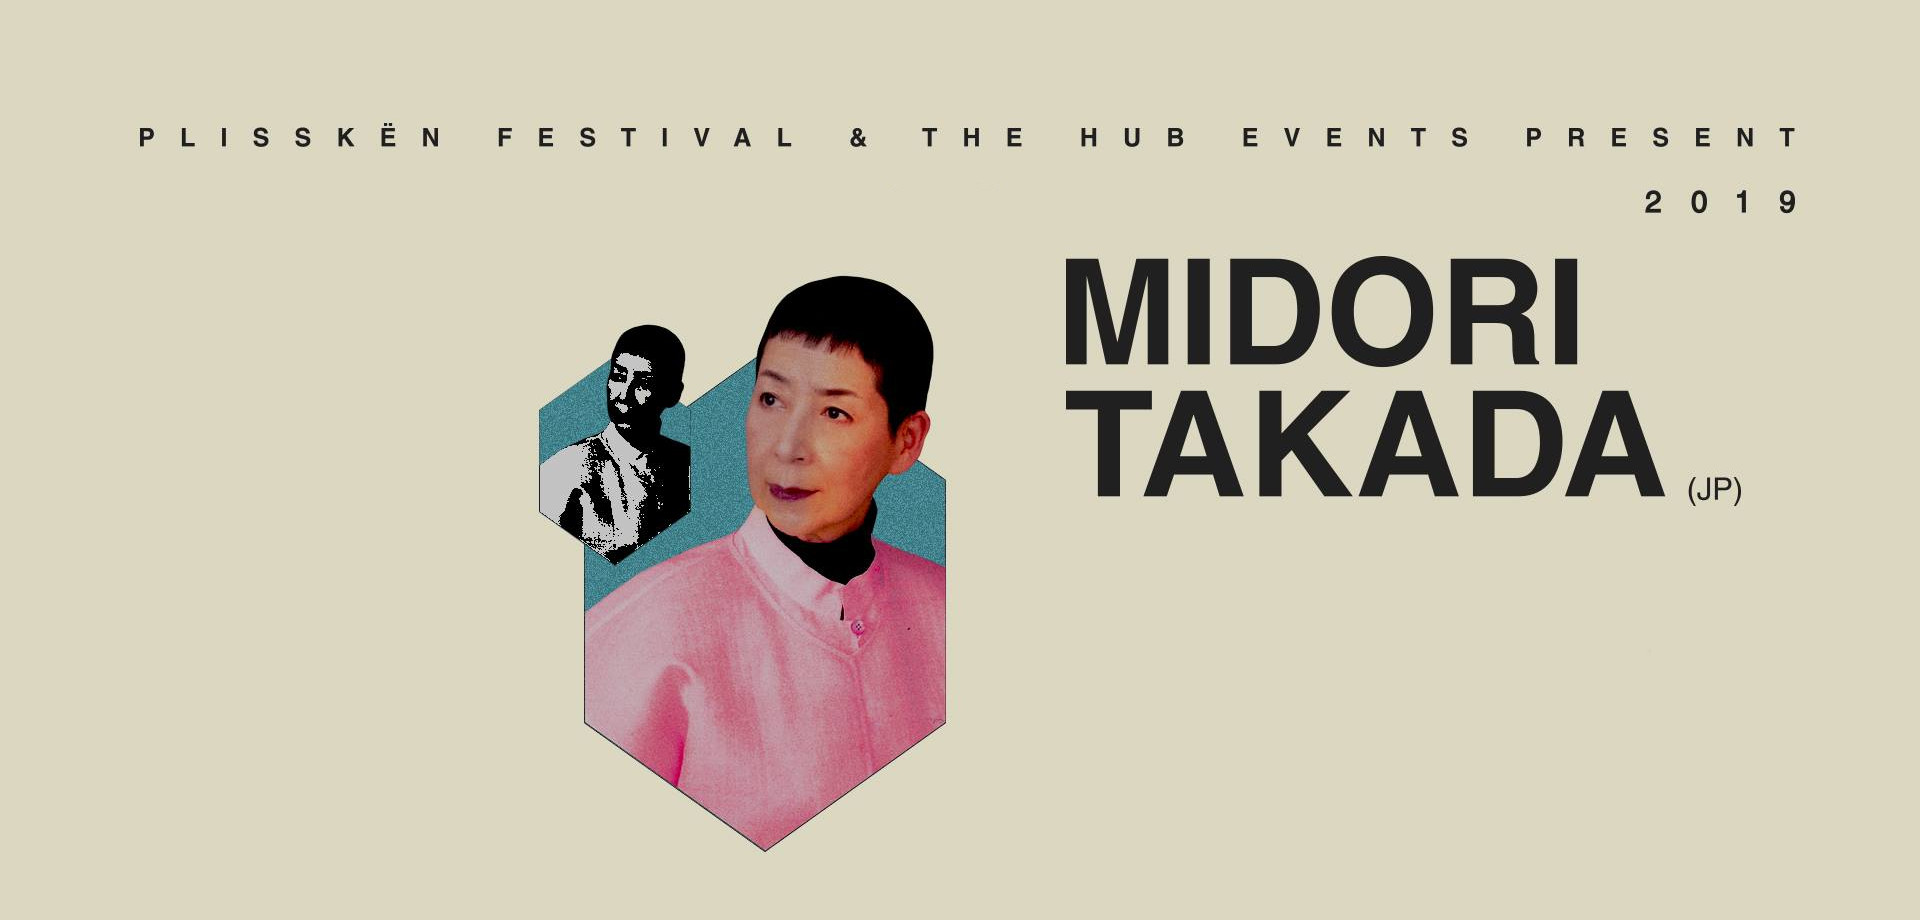 Midori Takada